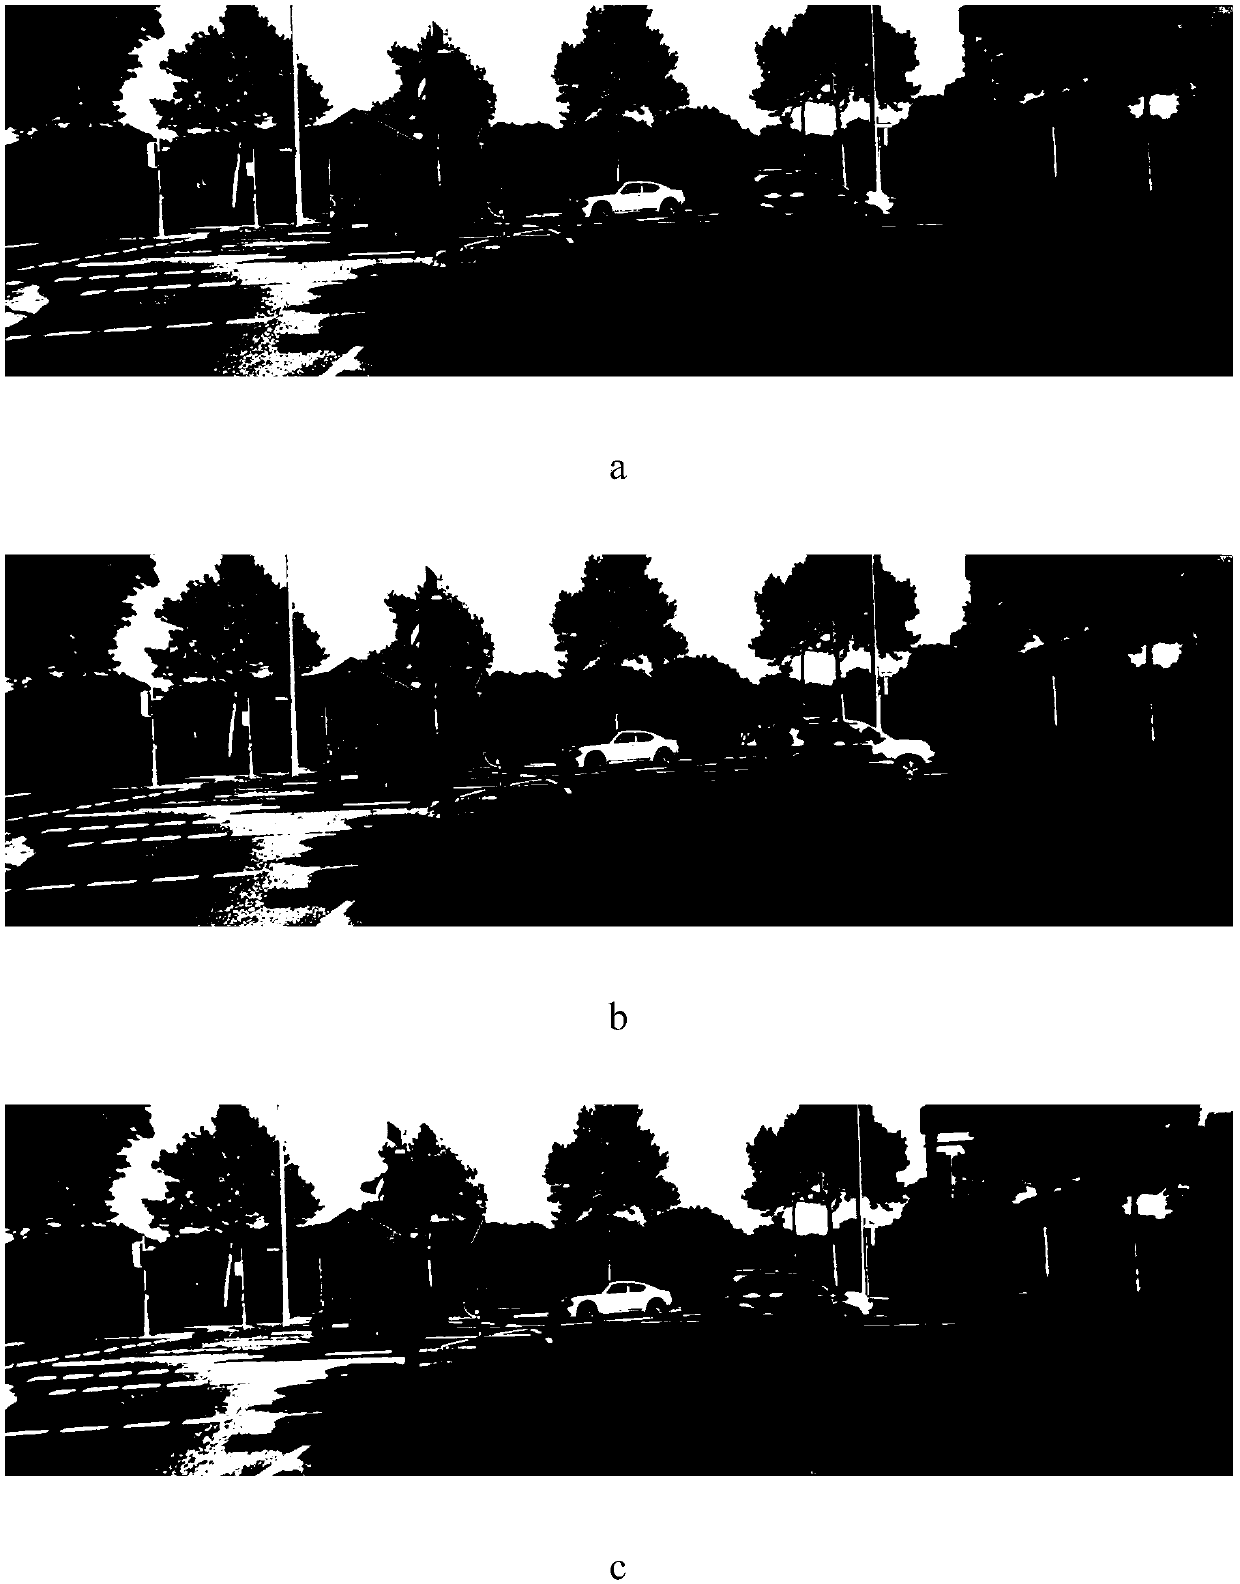 A method and a system for determining binocular scene flow based on semantic segmentation